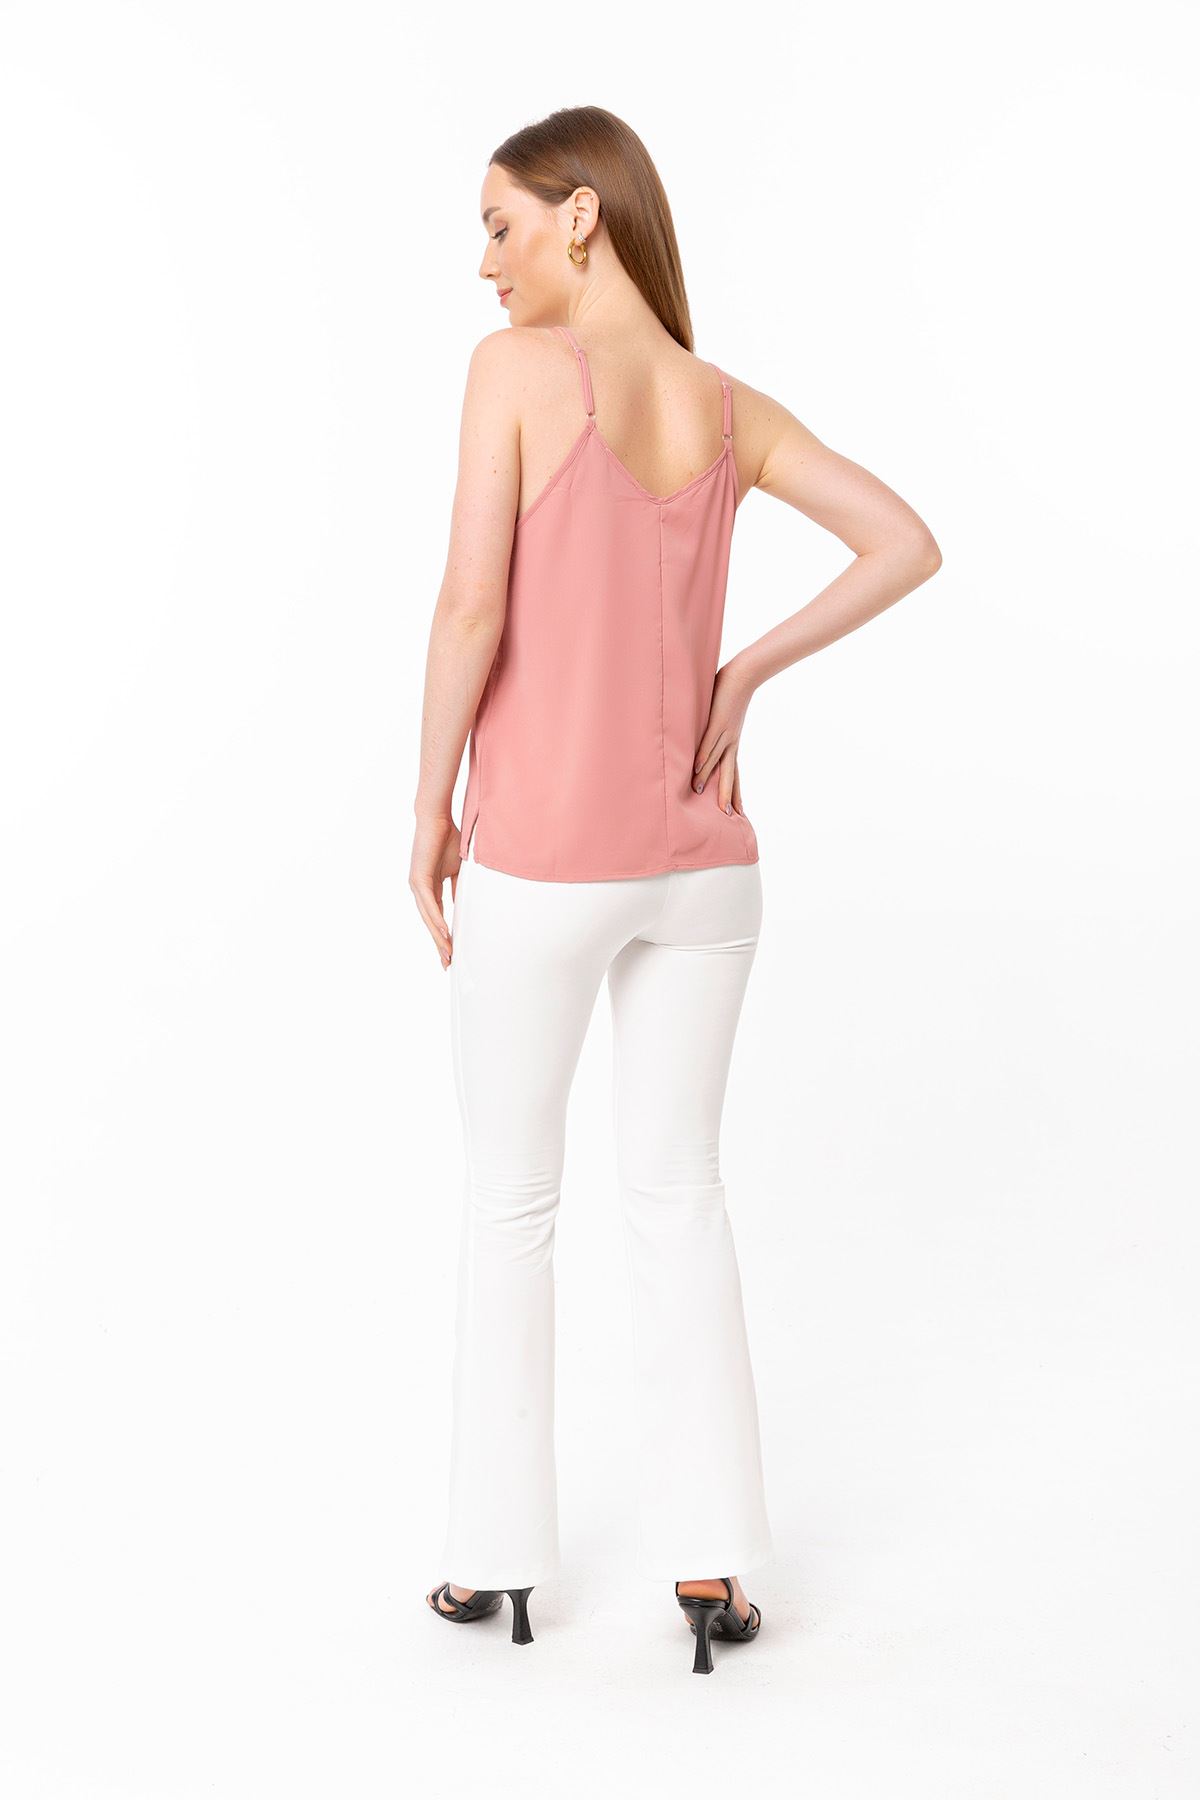 Jesica Fabric On The Straps V-Neck Blouse - Light Pink